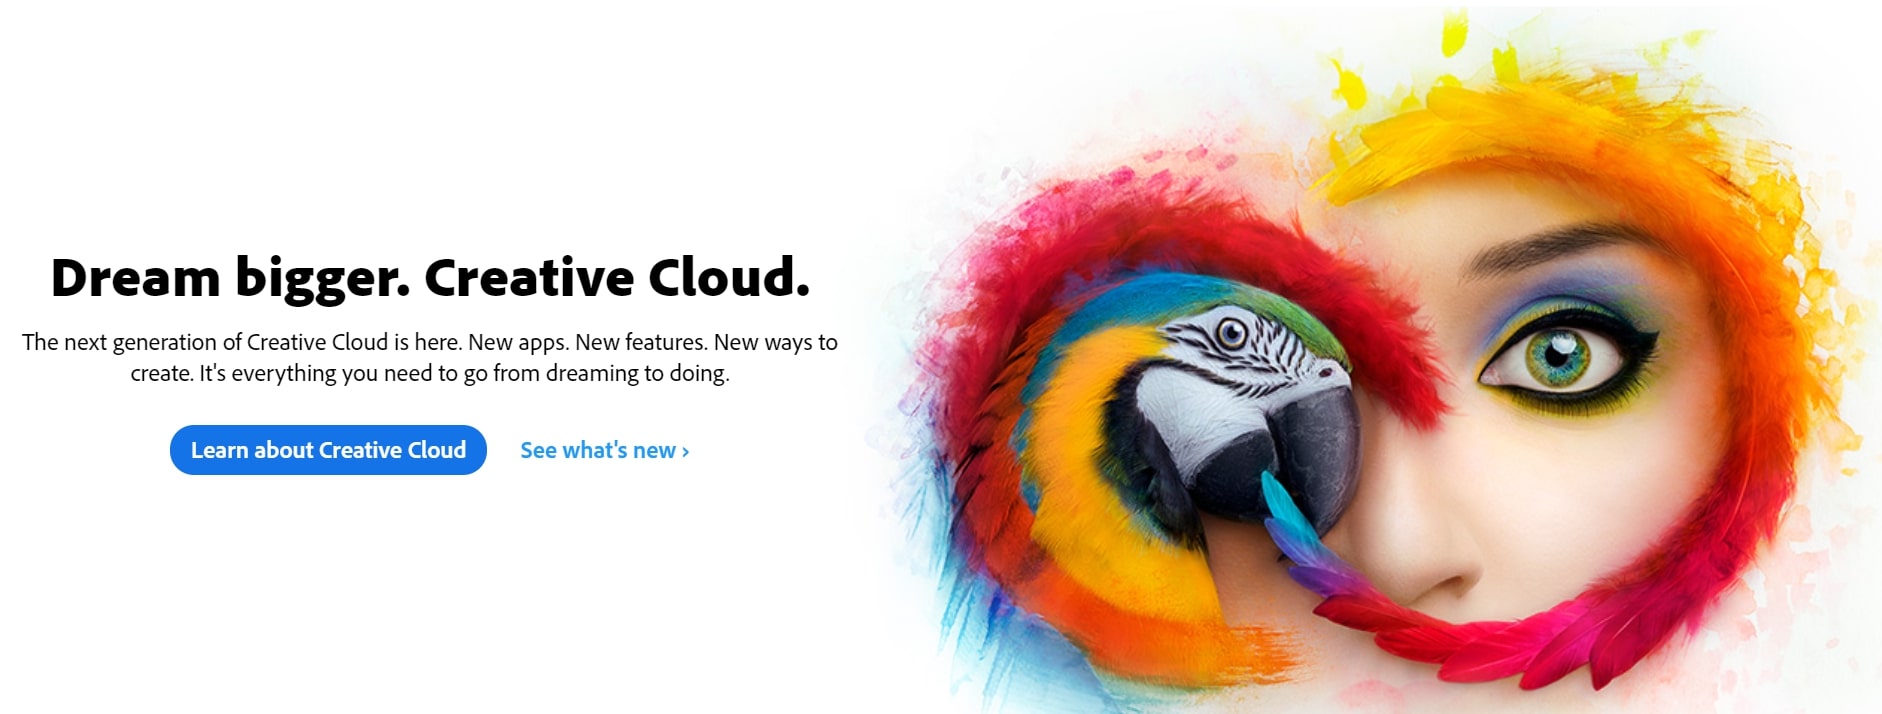 Adobe Creative Cloud header